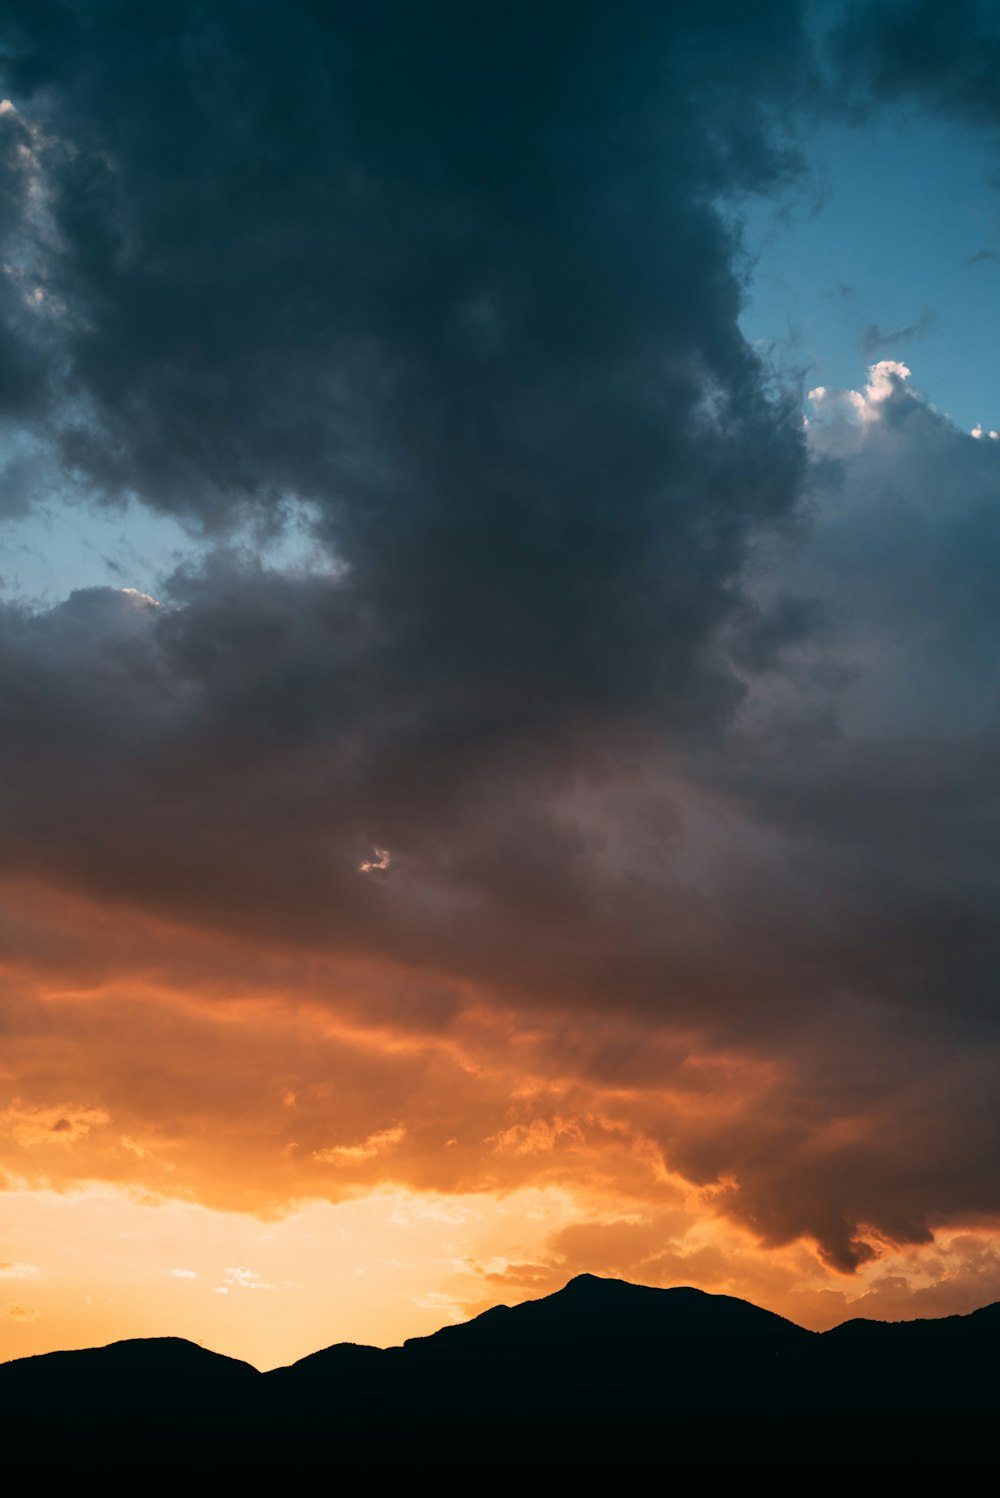 nimbus clouds during golden hour